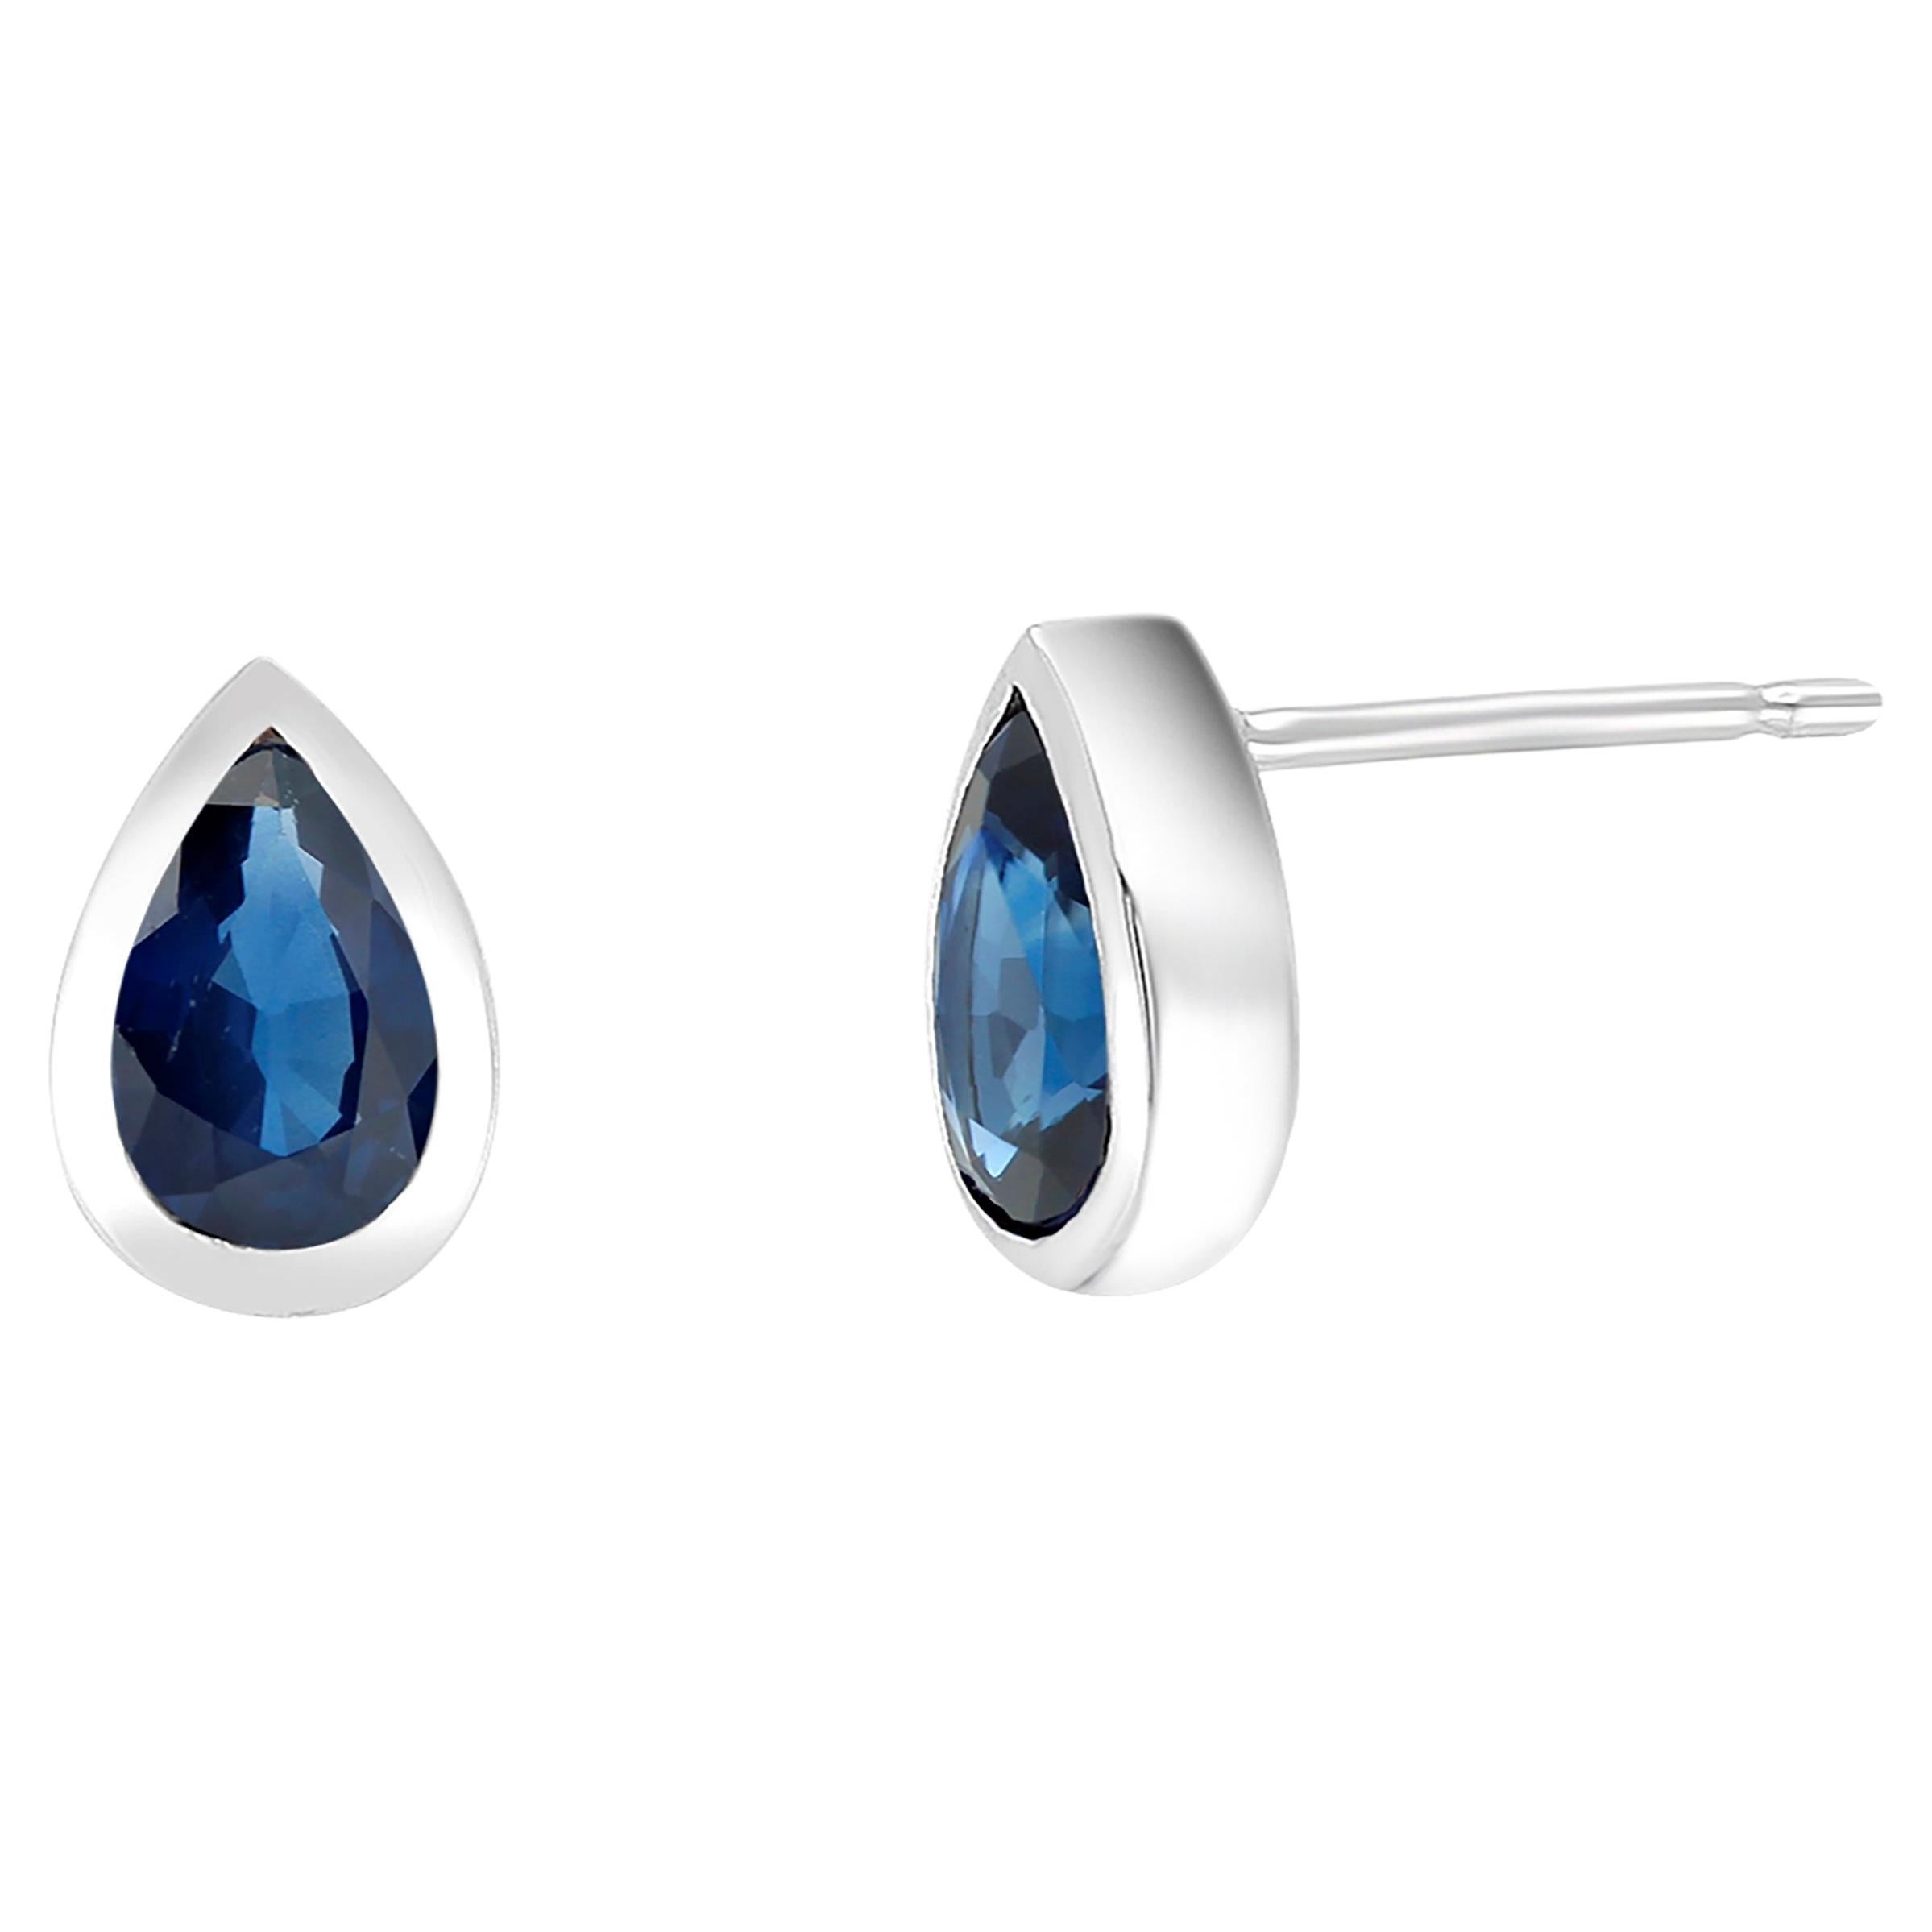 White Gold Bezel Set Pair Blue Pear Shaped Sapphire Stud Earrings